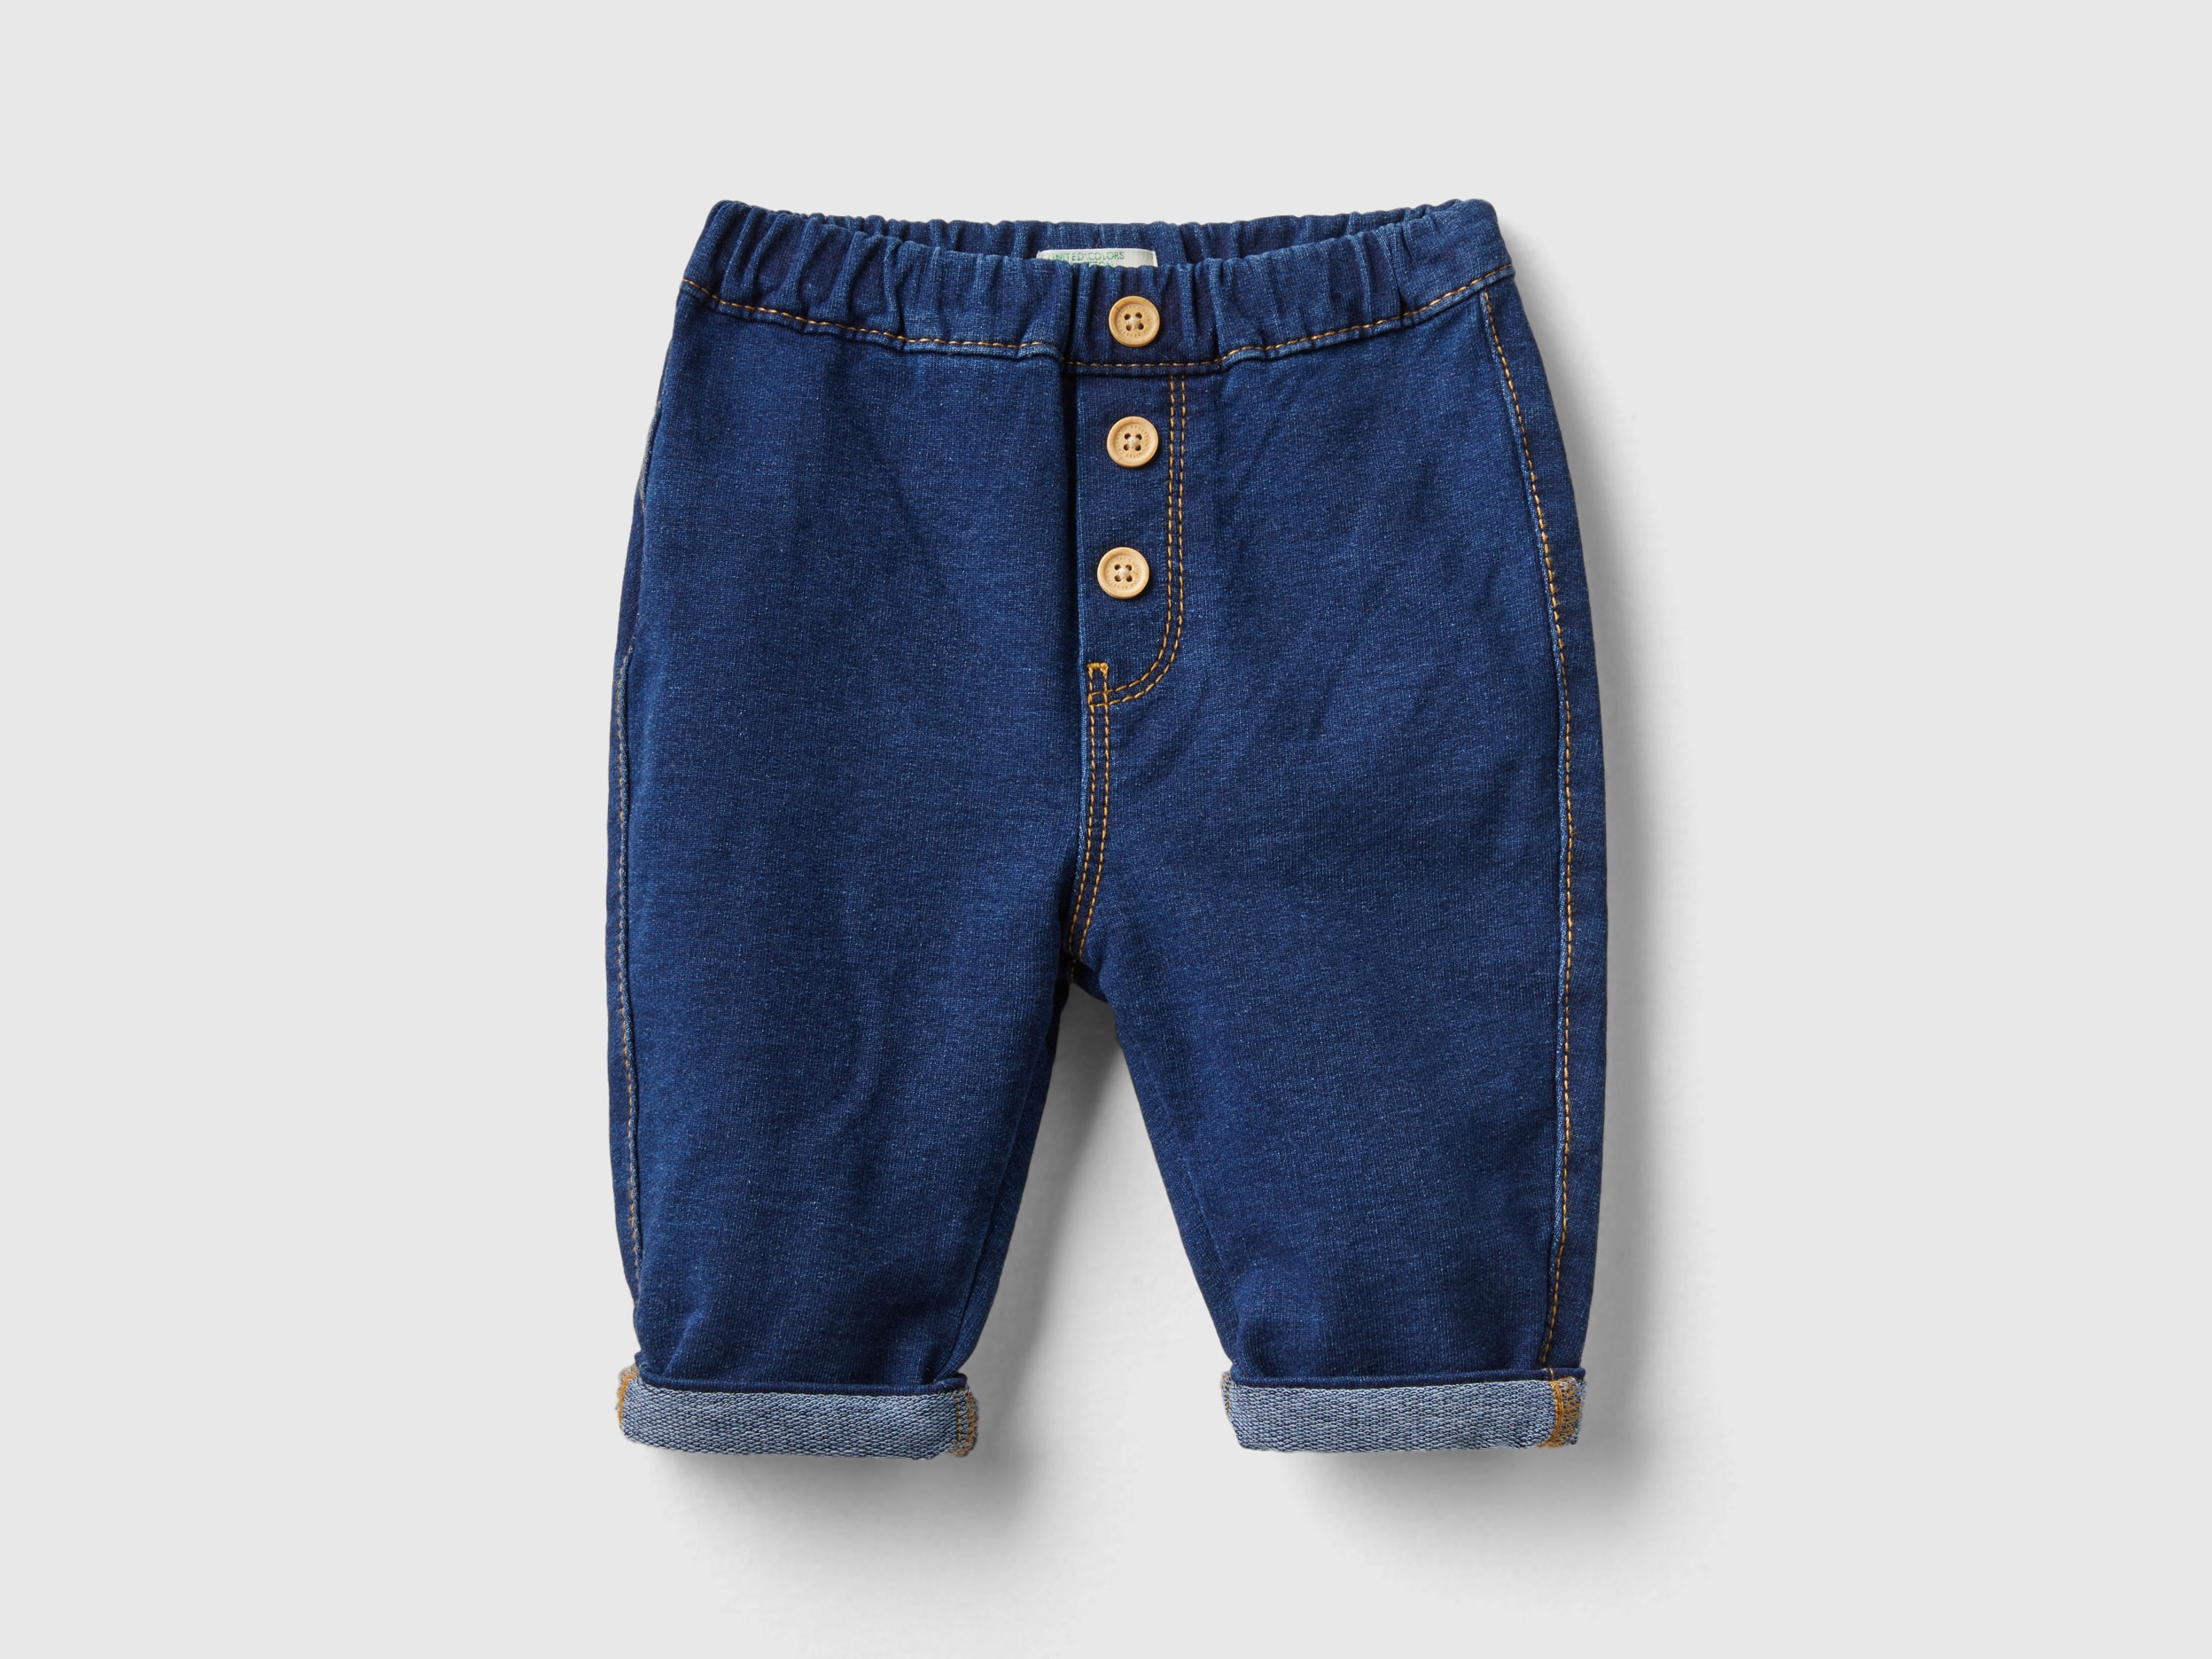 Benetton, Denim Look Baggy Fit Trousers, size 3-6, Dark Blue, Kids